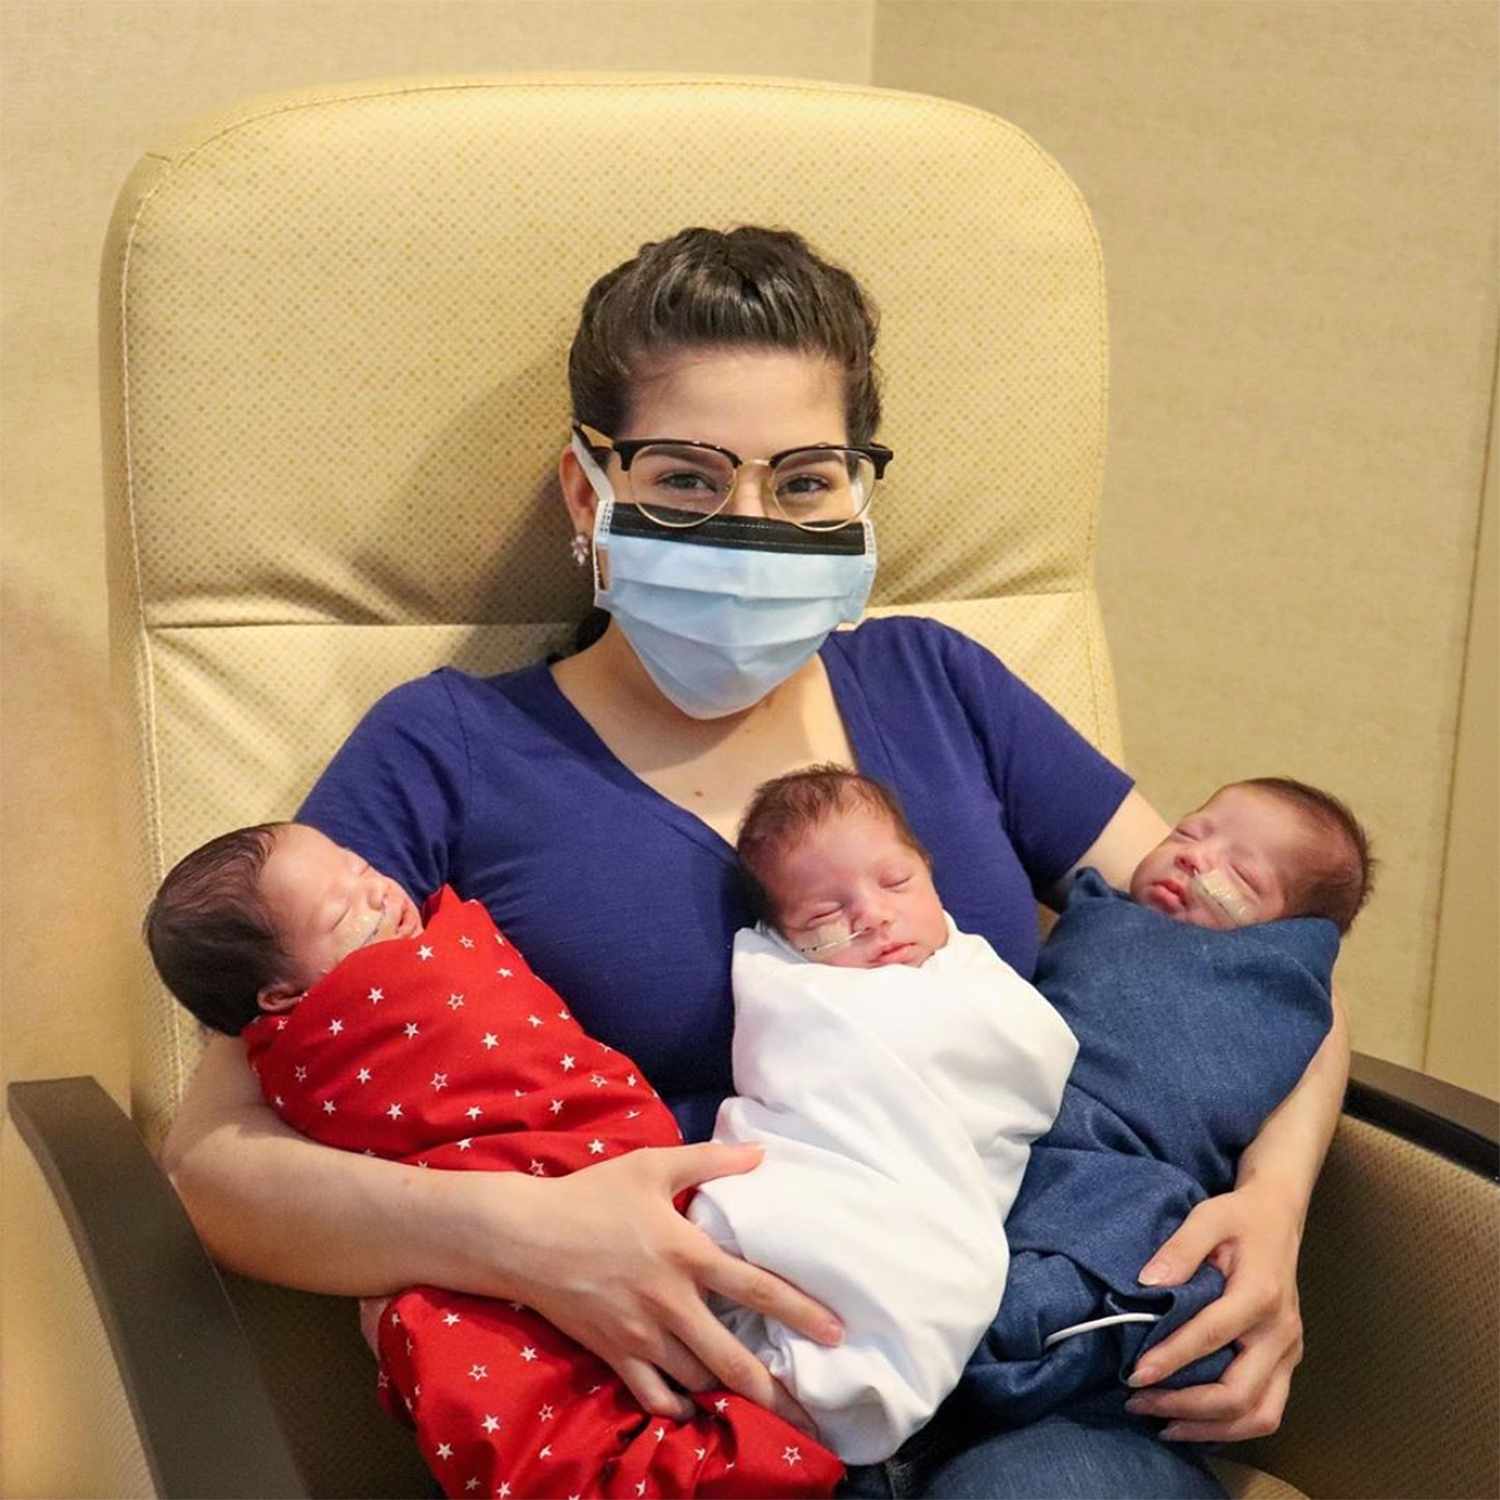 Houston mom gives birth to triplets amid Covid